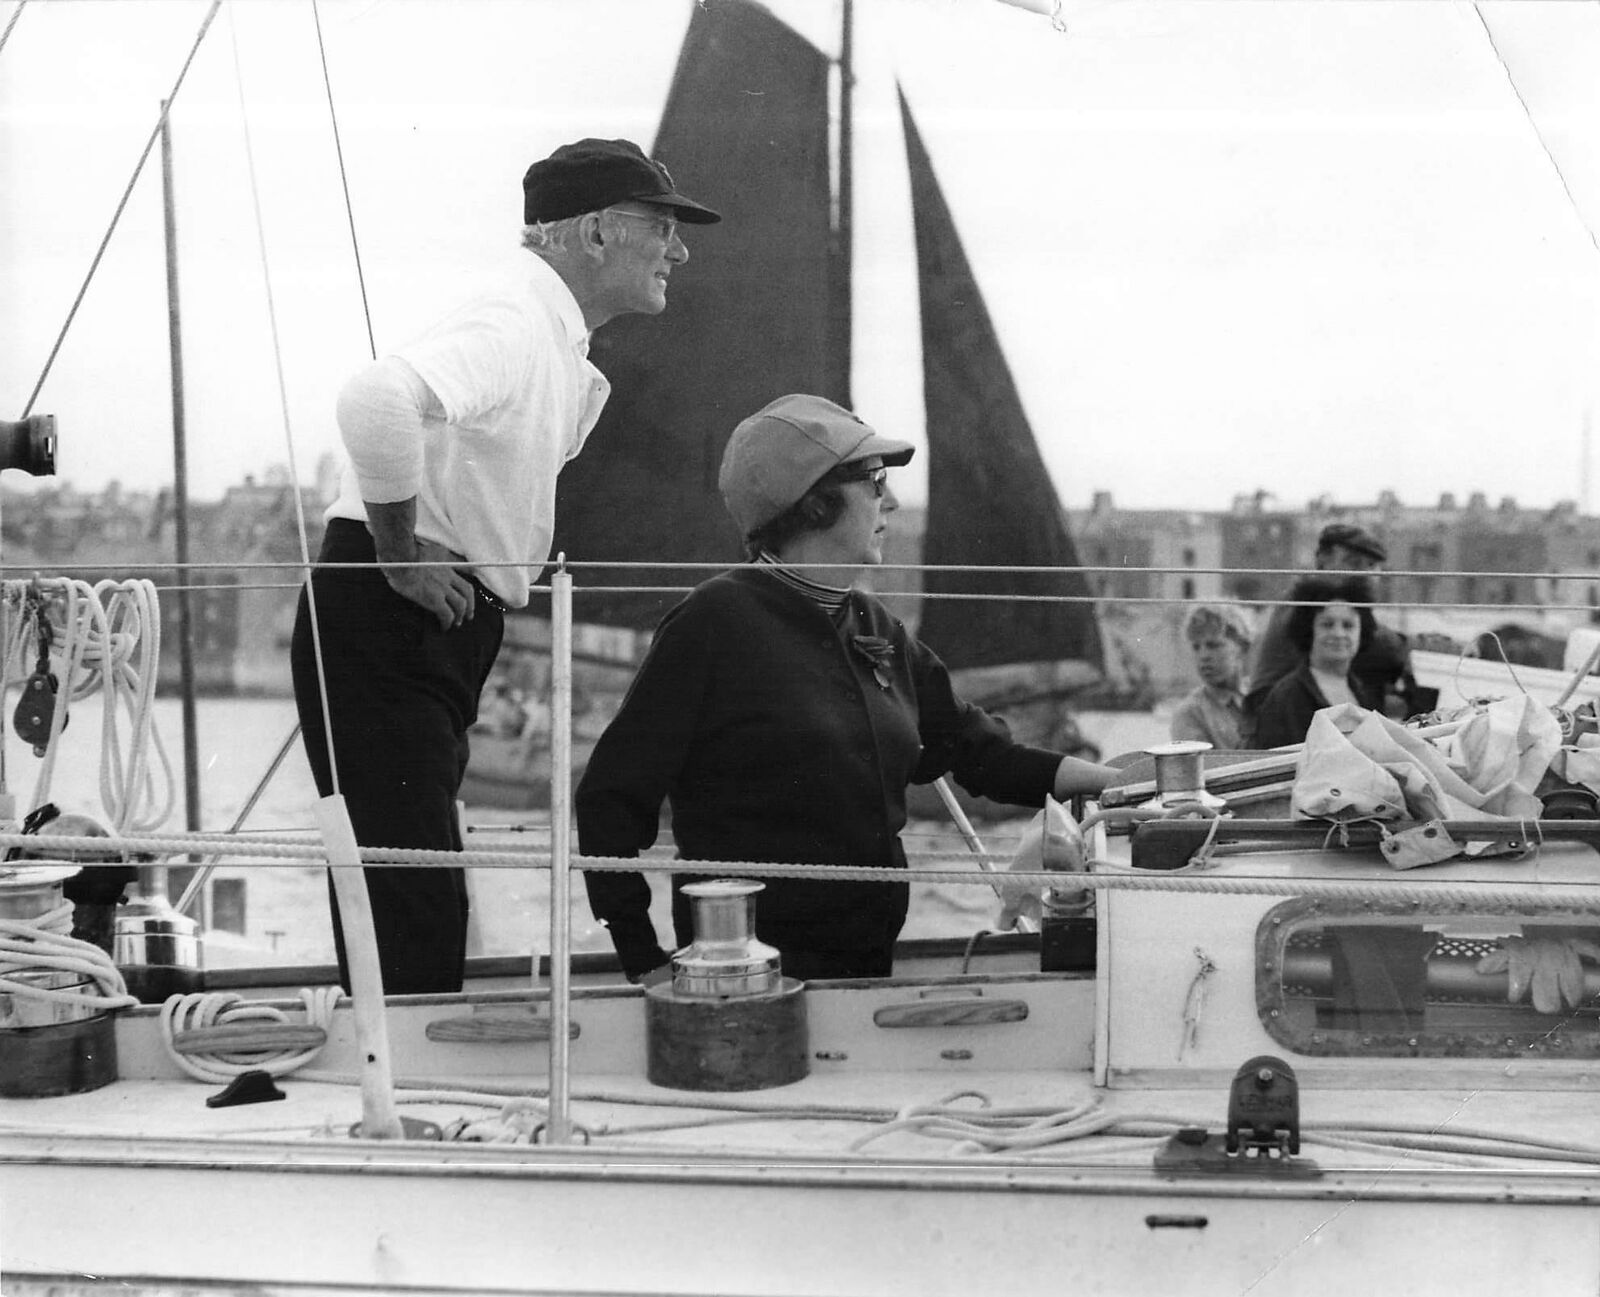 1967 Press Photo FRANCIS CHICHESTER & Wife Sailing Gipsy Moth IV gypsy yacht kg